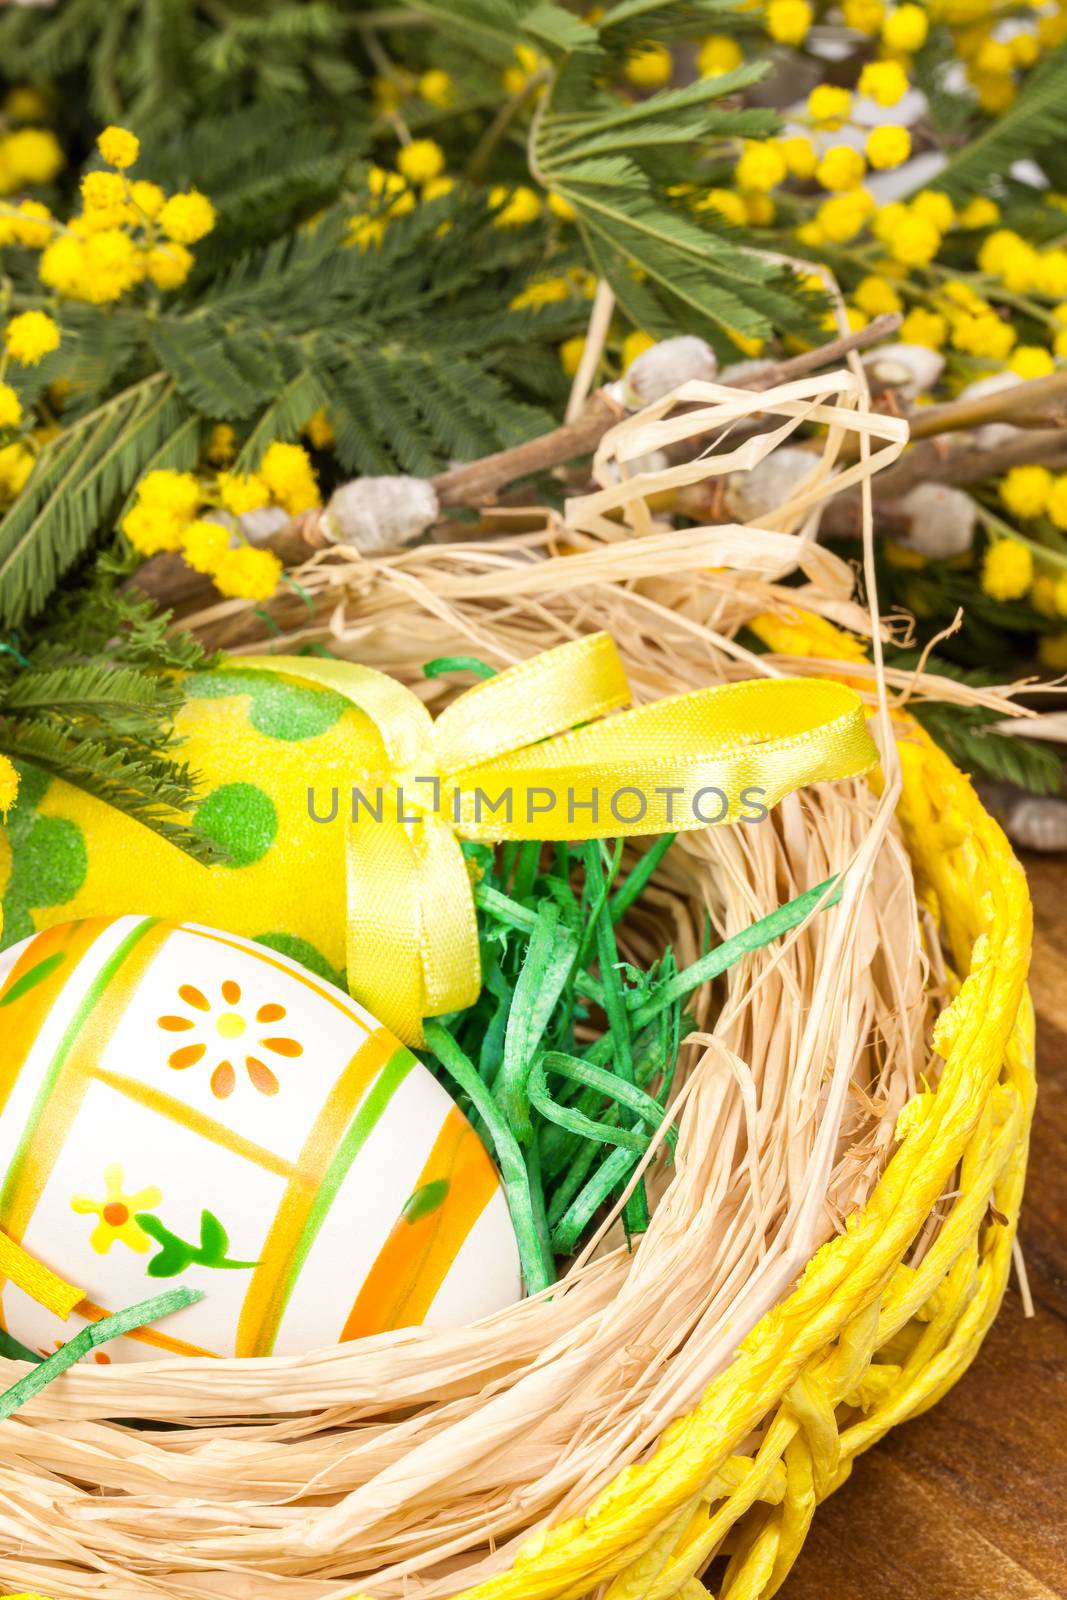 Easter eggs by Slast20